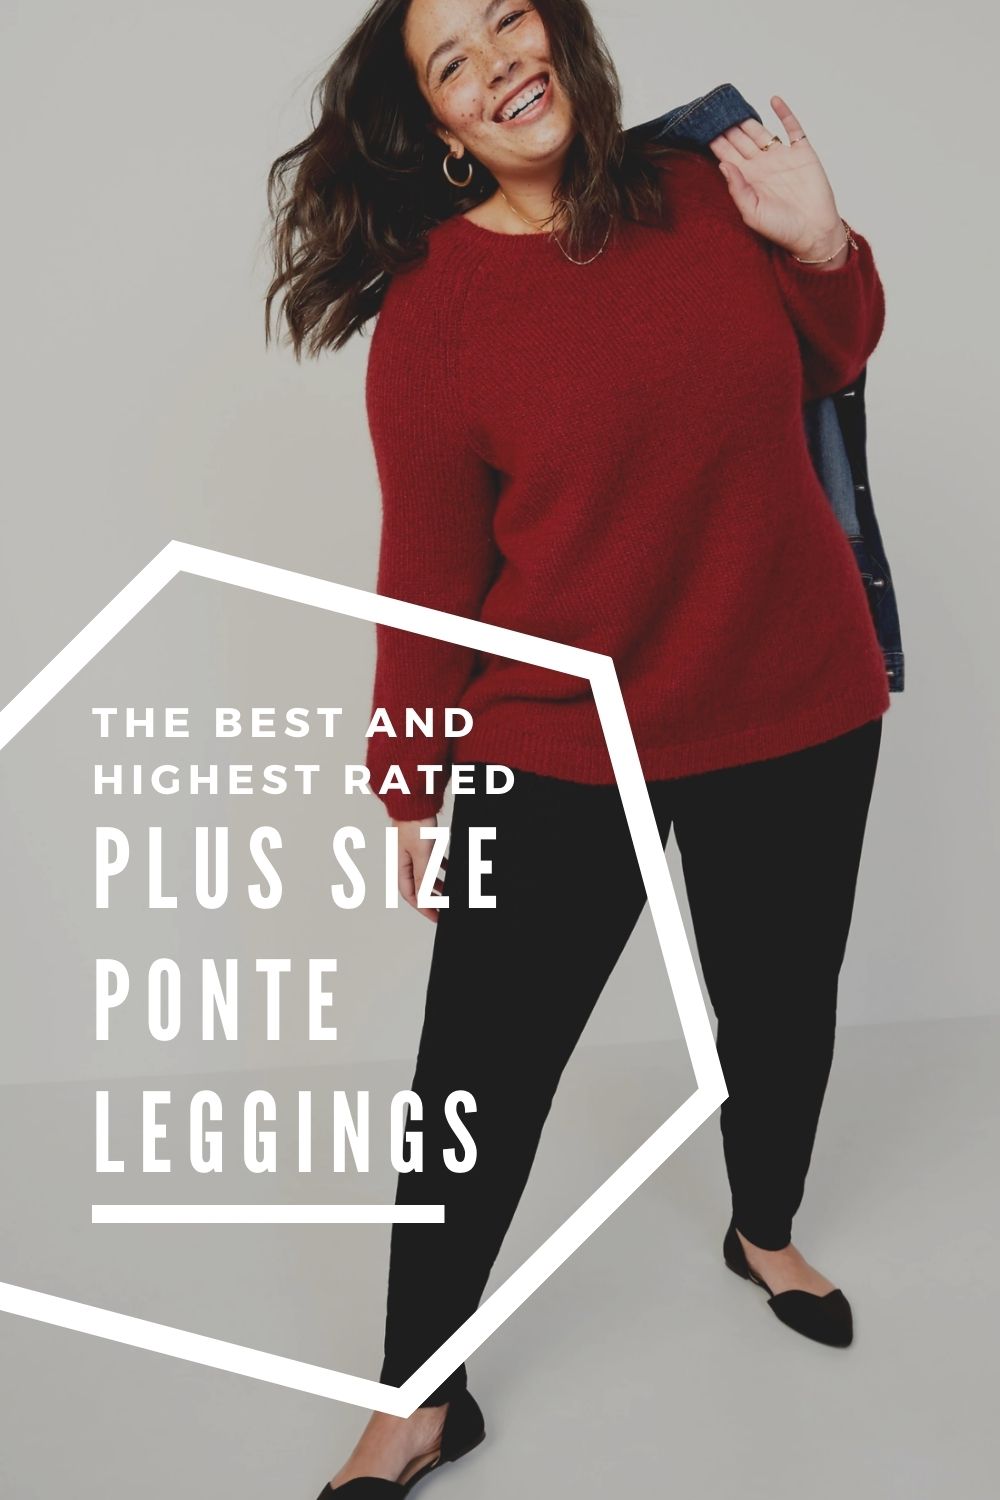 https://www.wardrobeoxygen.com/wp-content/uploads/2021/02/the-best-plus-size-ponte-leggings.jpg